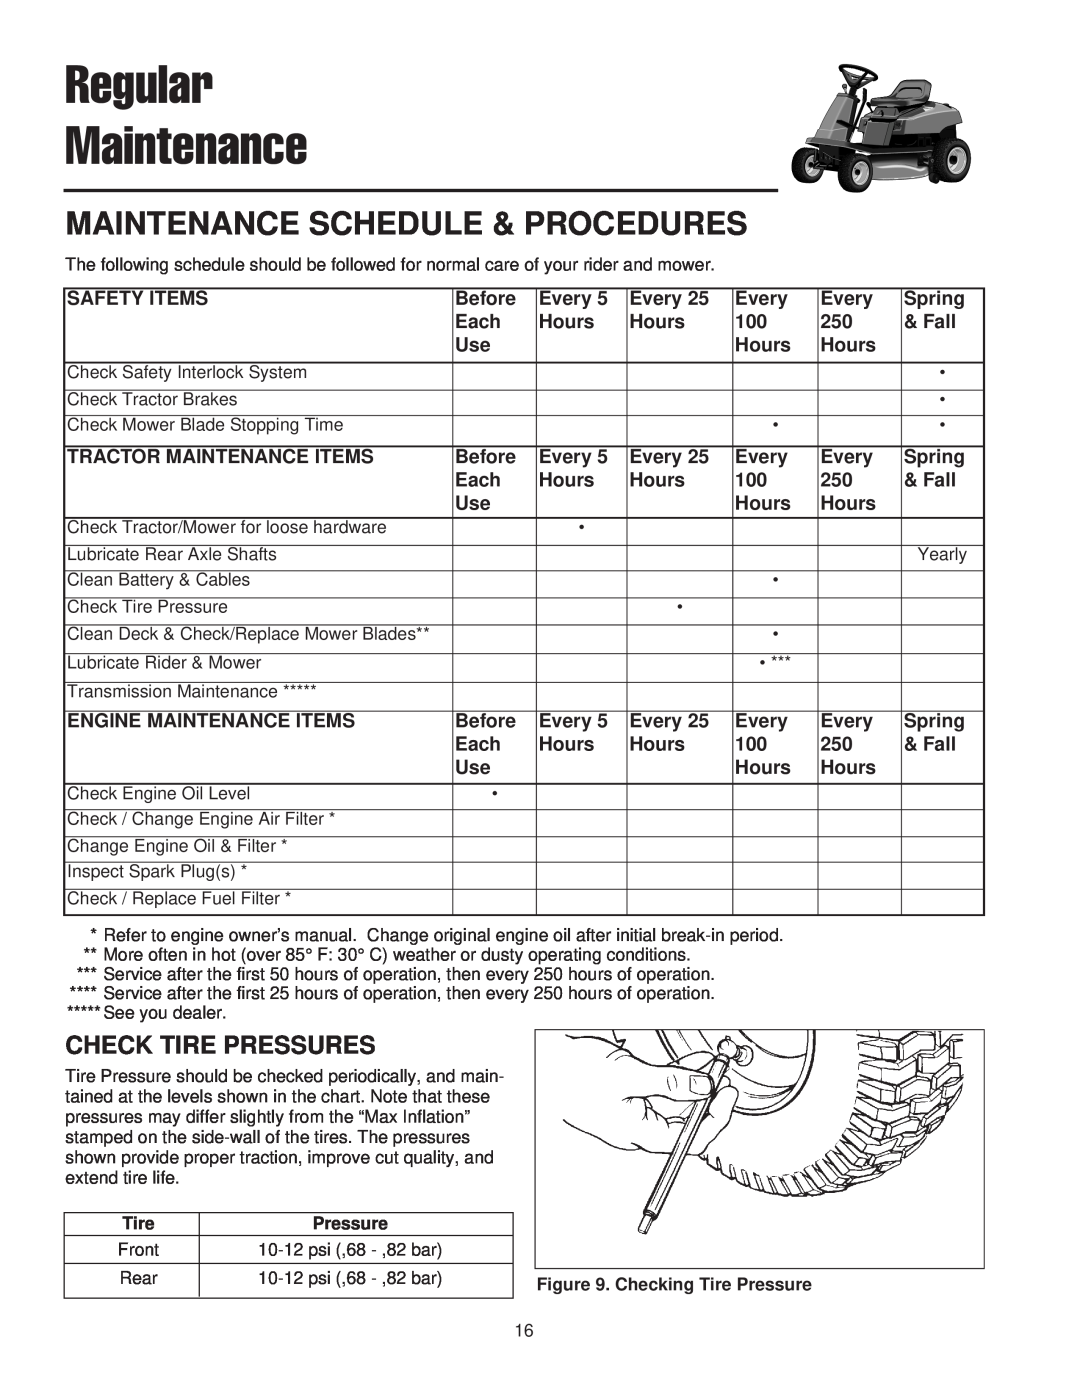 Snapper 400 / 2400 manual Regular Maintenance, Maintenance Schedule & Procedures, Check Tire Pressures 